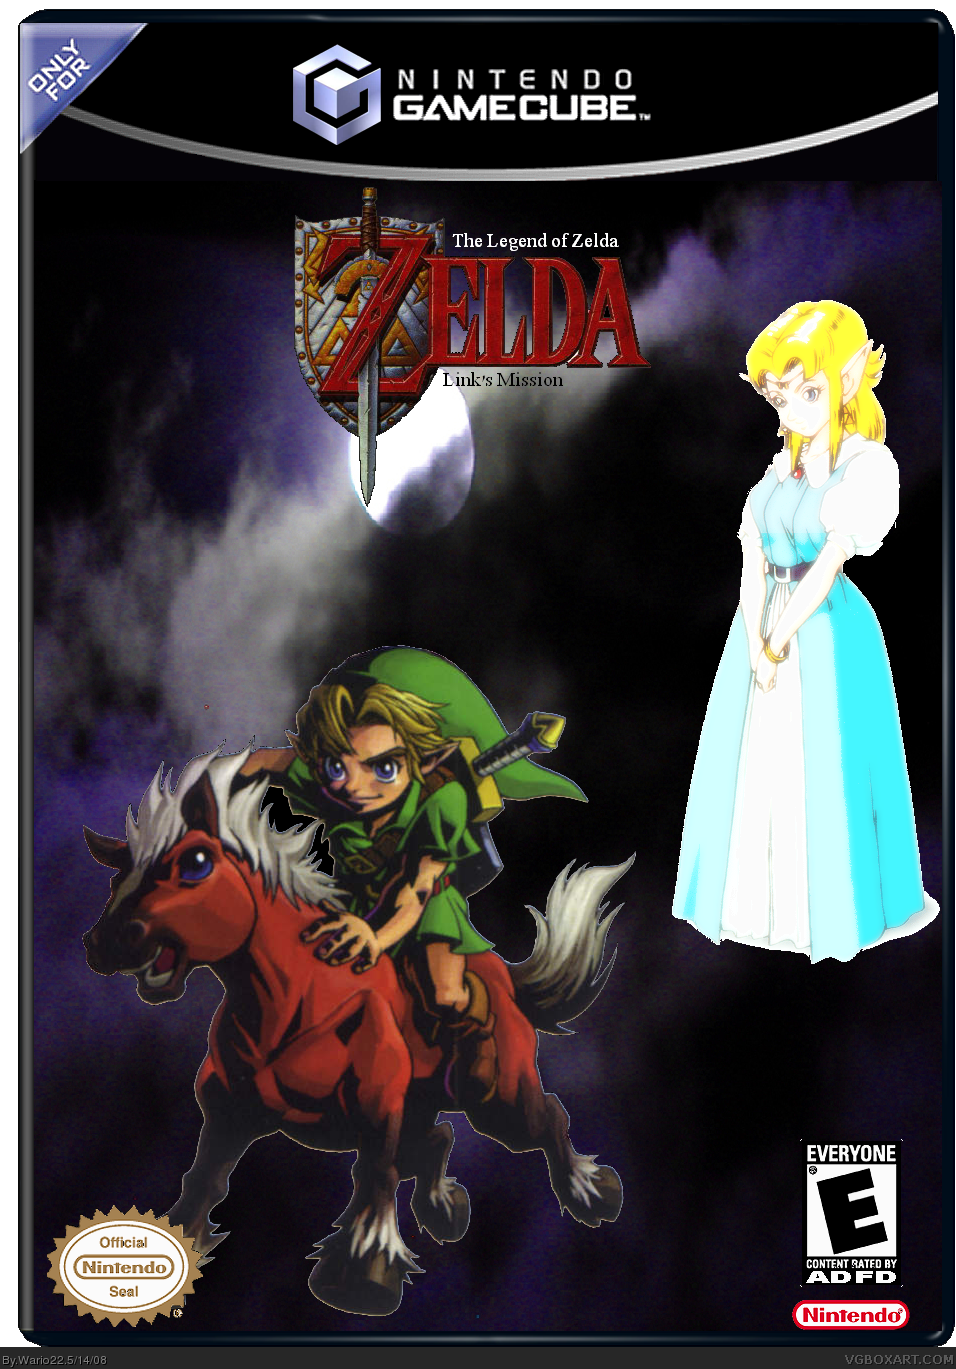 The Legend of Zelda Link's Mission box cover